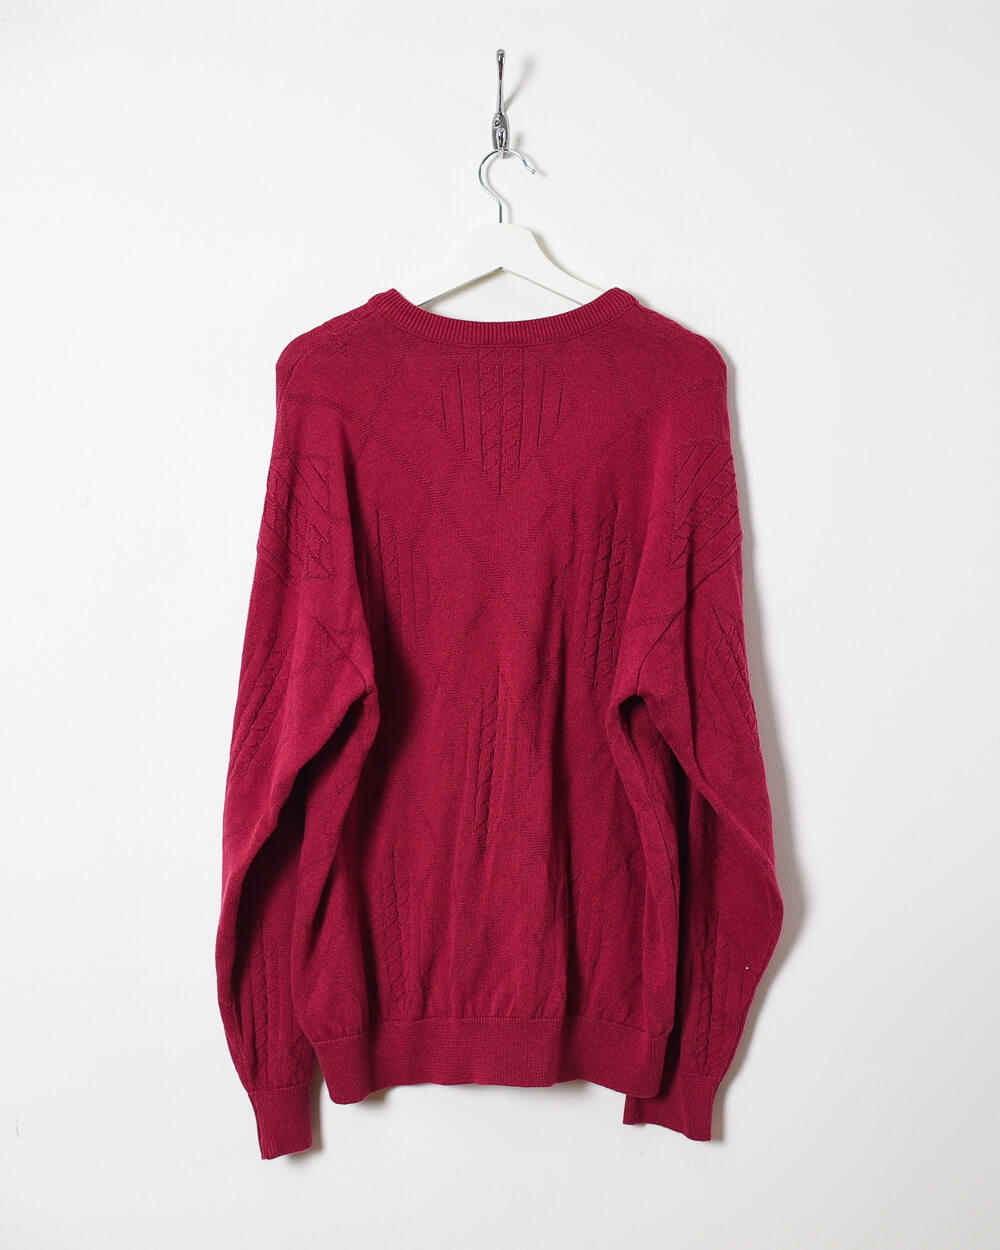 Maroon Chemise Lacoste Knitted Sweatshirt - Large